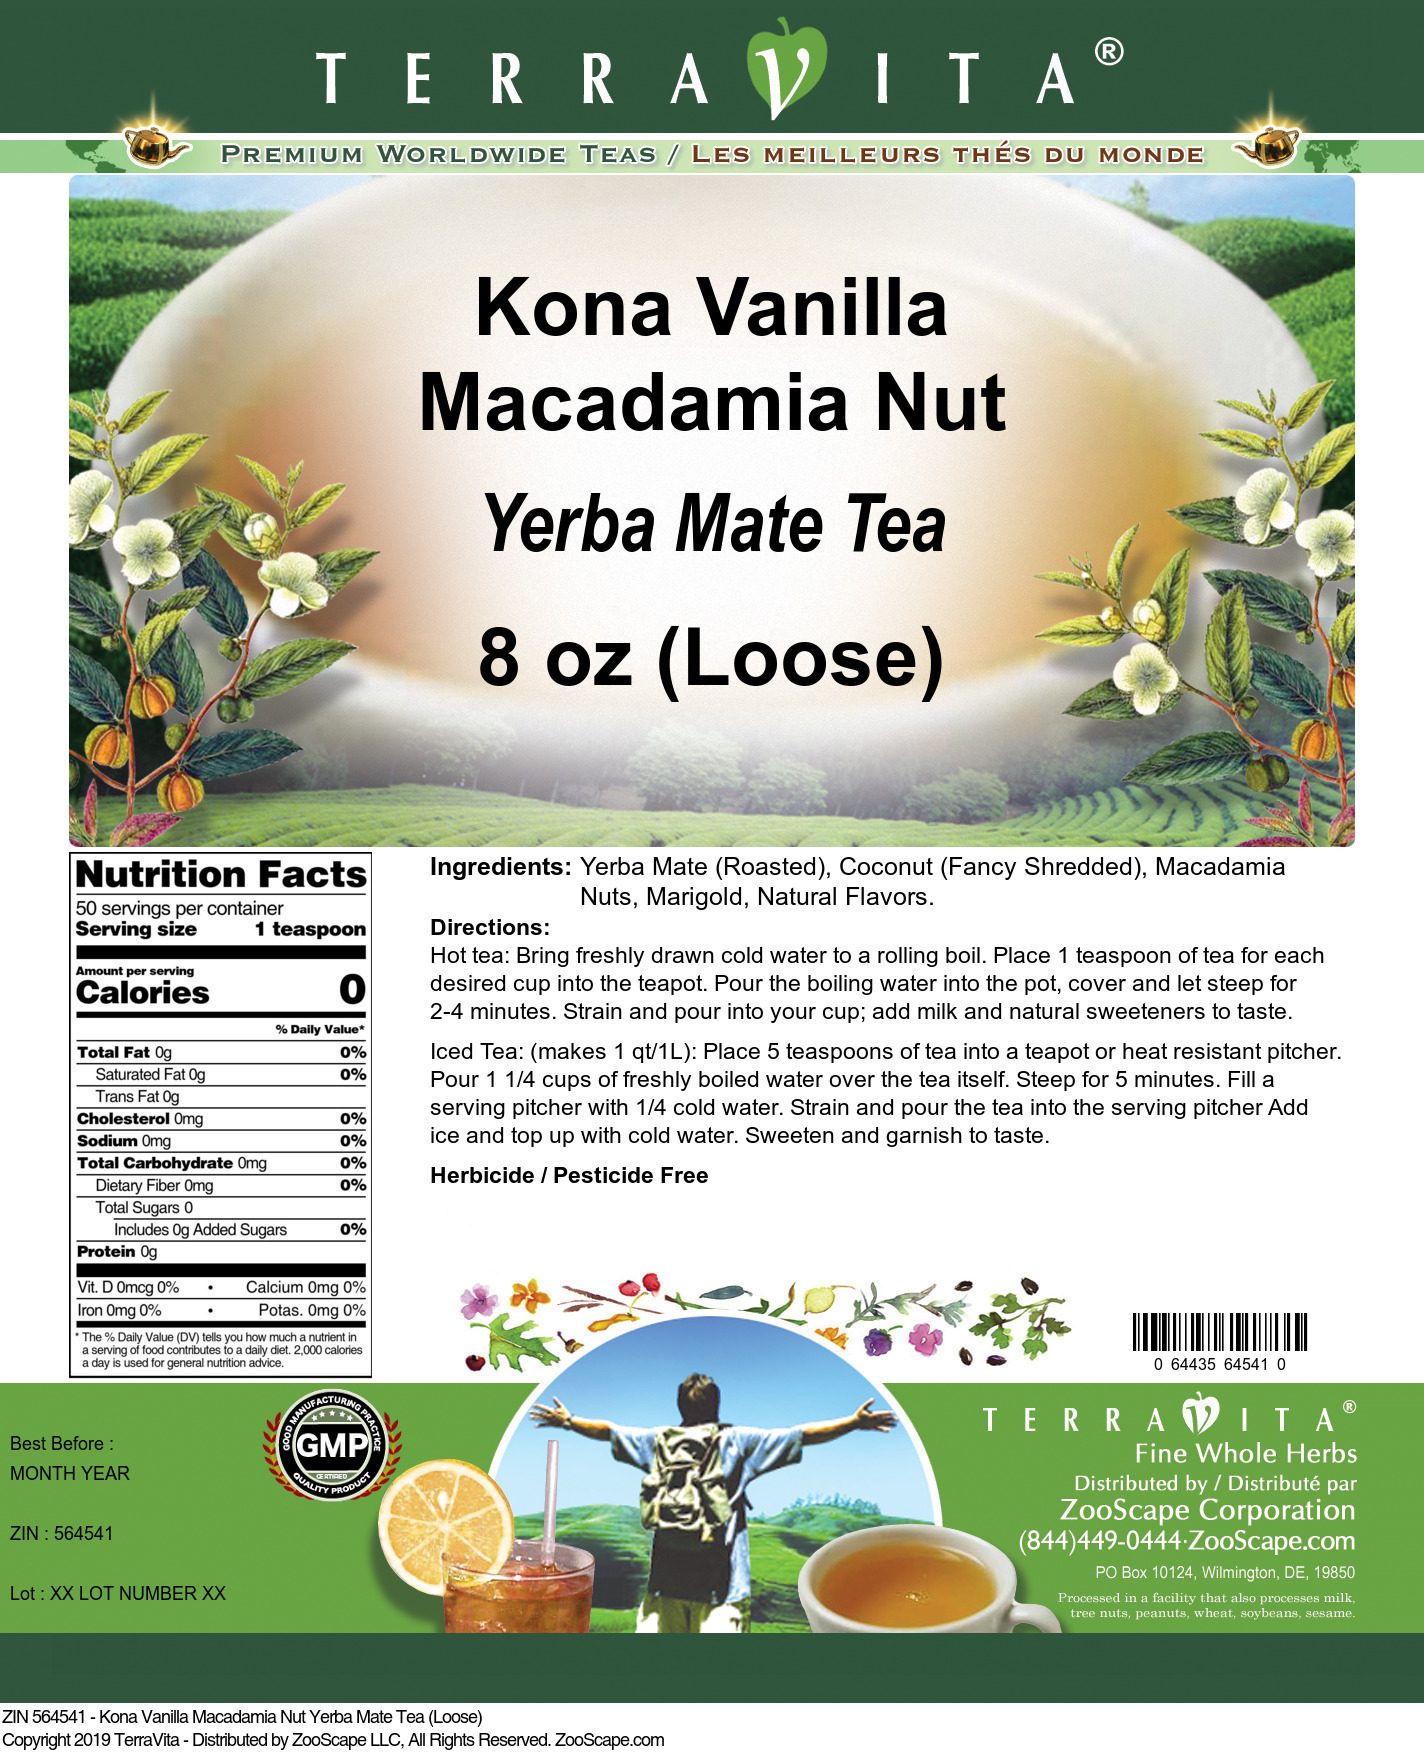 Kona Vanilla Macadamia Nut Yerba Mate Tea (Loose) - Label